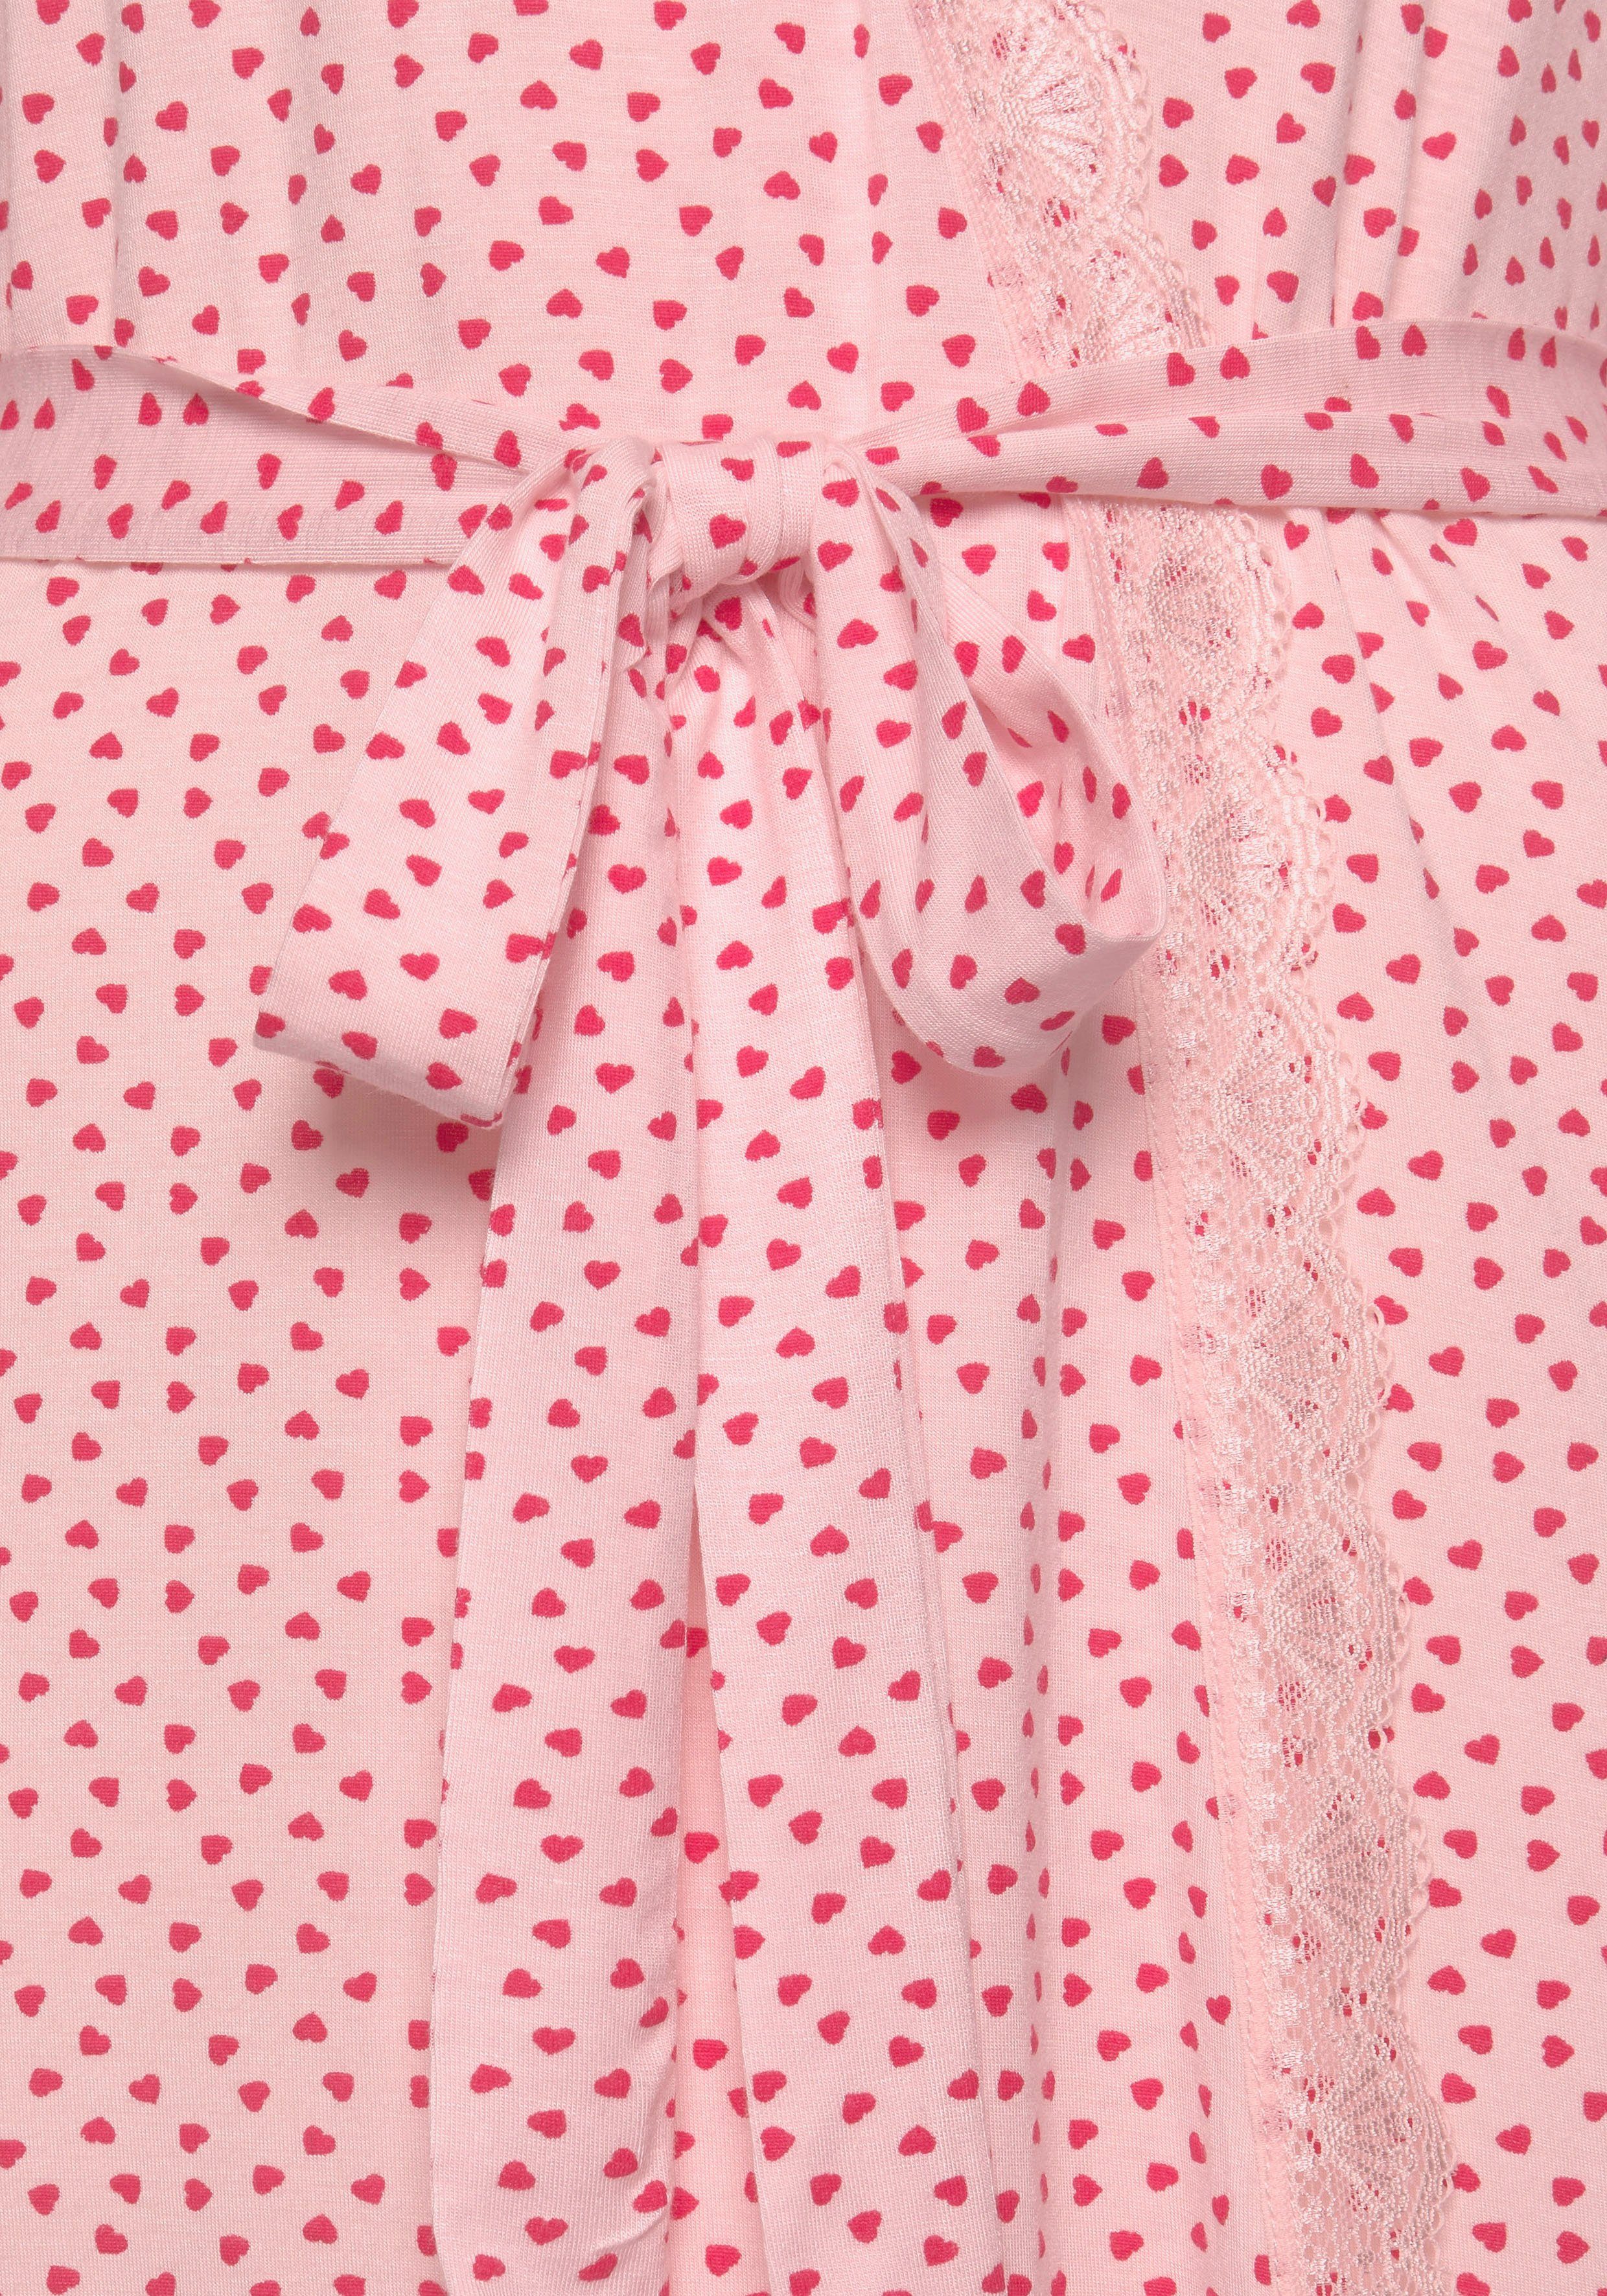 s.Oliver Kimono, Kurzform, Single-Jersey, Gürtel, mit Herzchendruck und hellrosa-gemustert Spitze